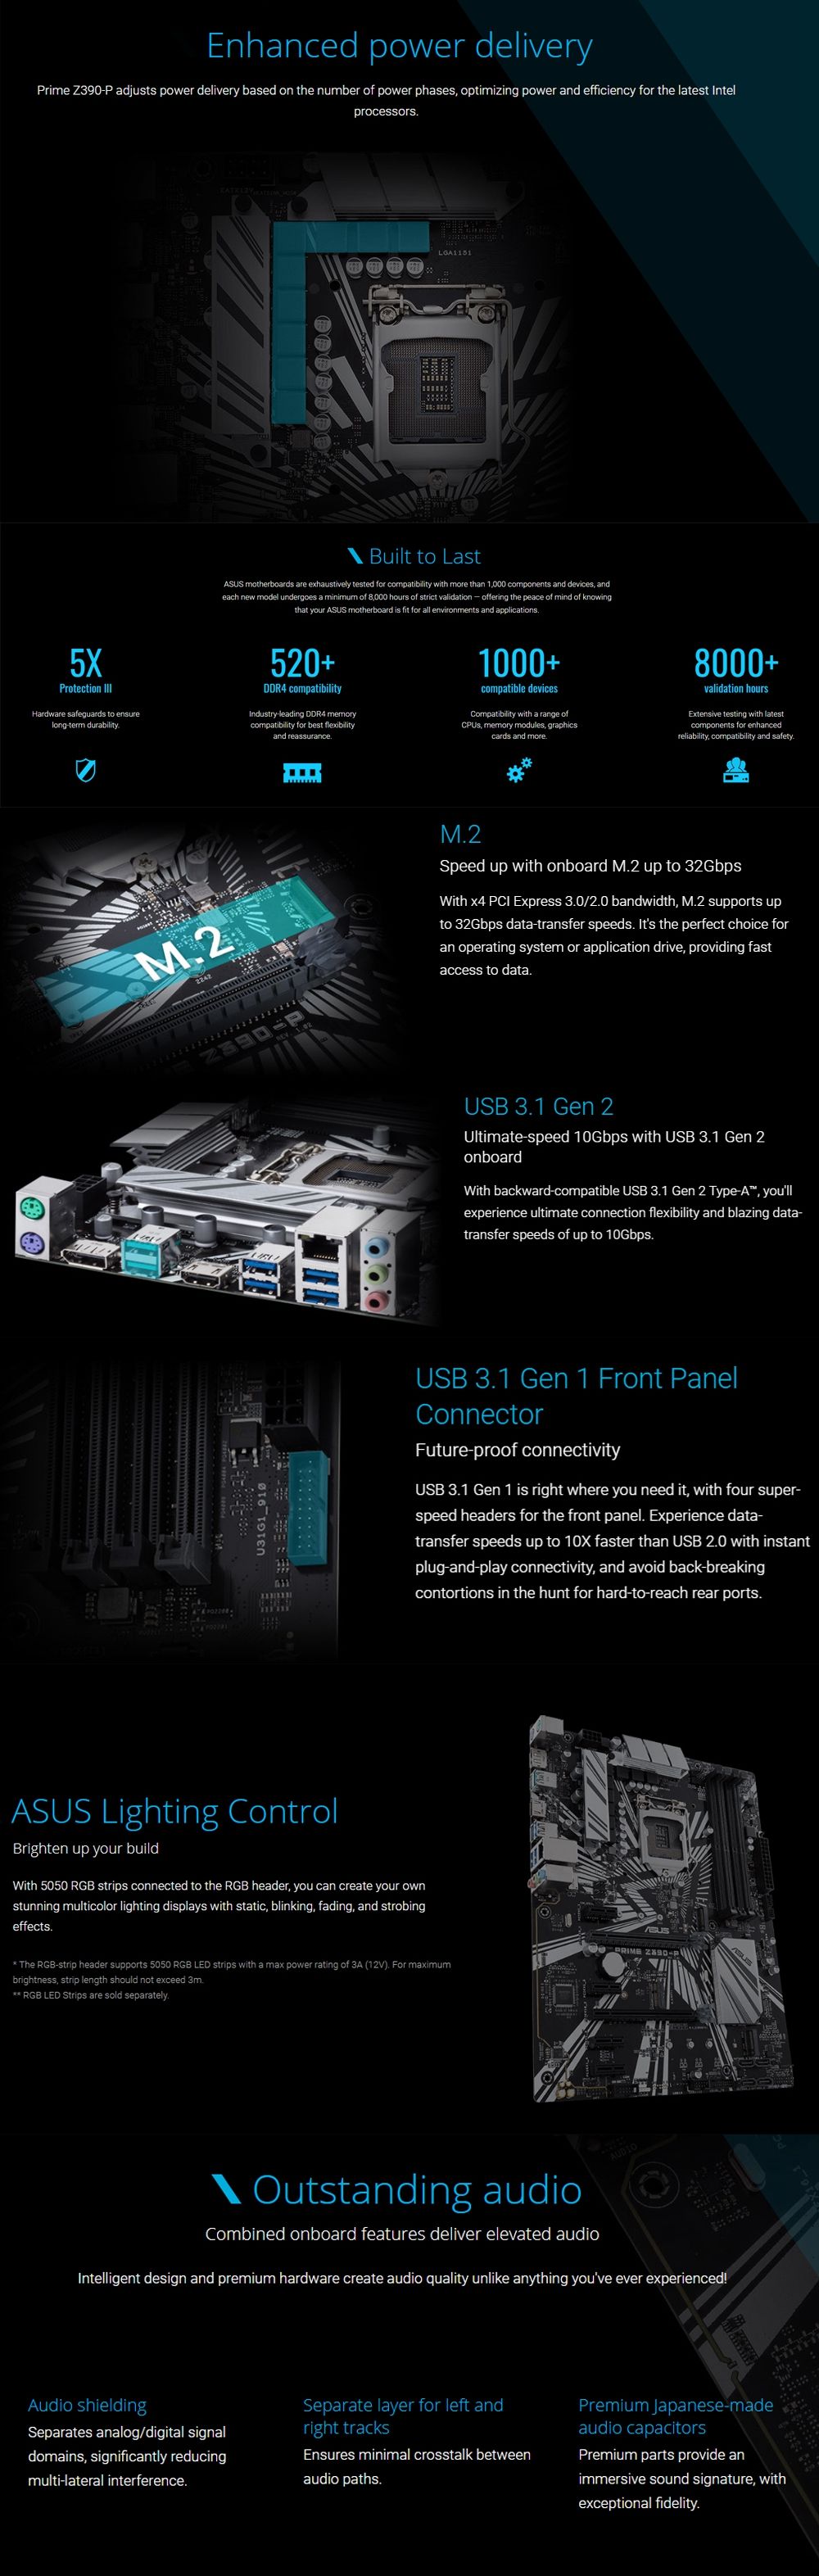 ASUS-PRIME-Z390-P-Intelreg-Z390-Chip-ATX-Motherboard-64GB-DDR4-Mainboard-for-LGA-1151-1606216